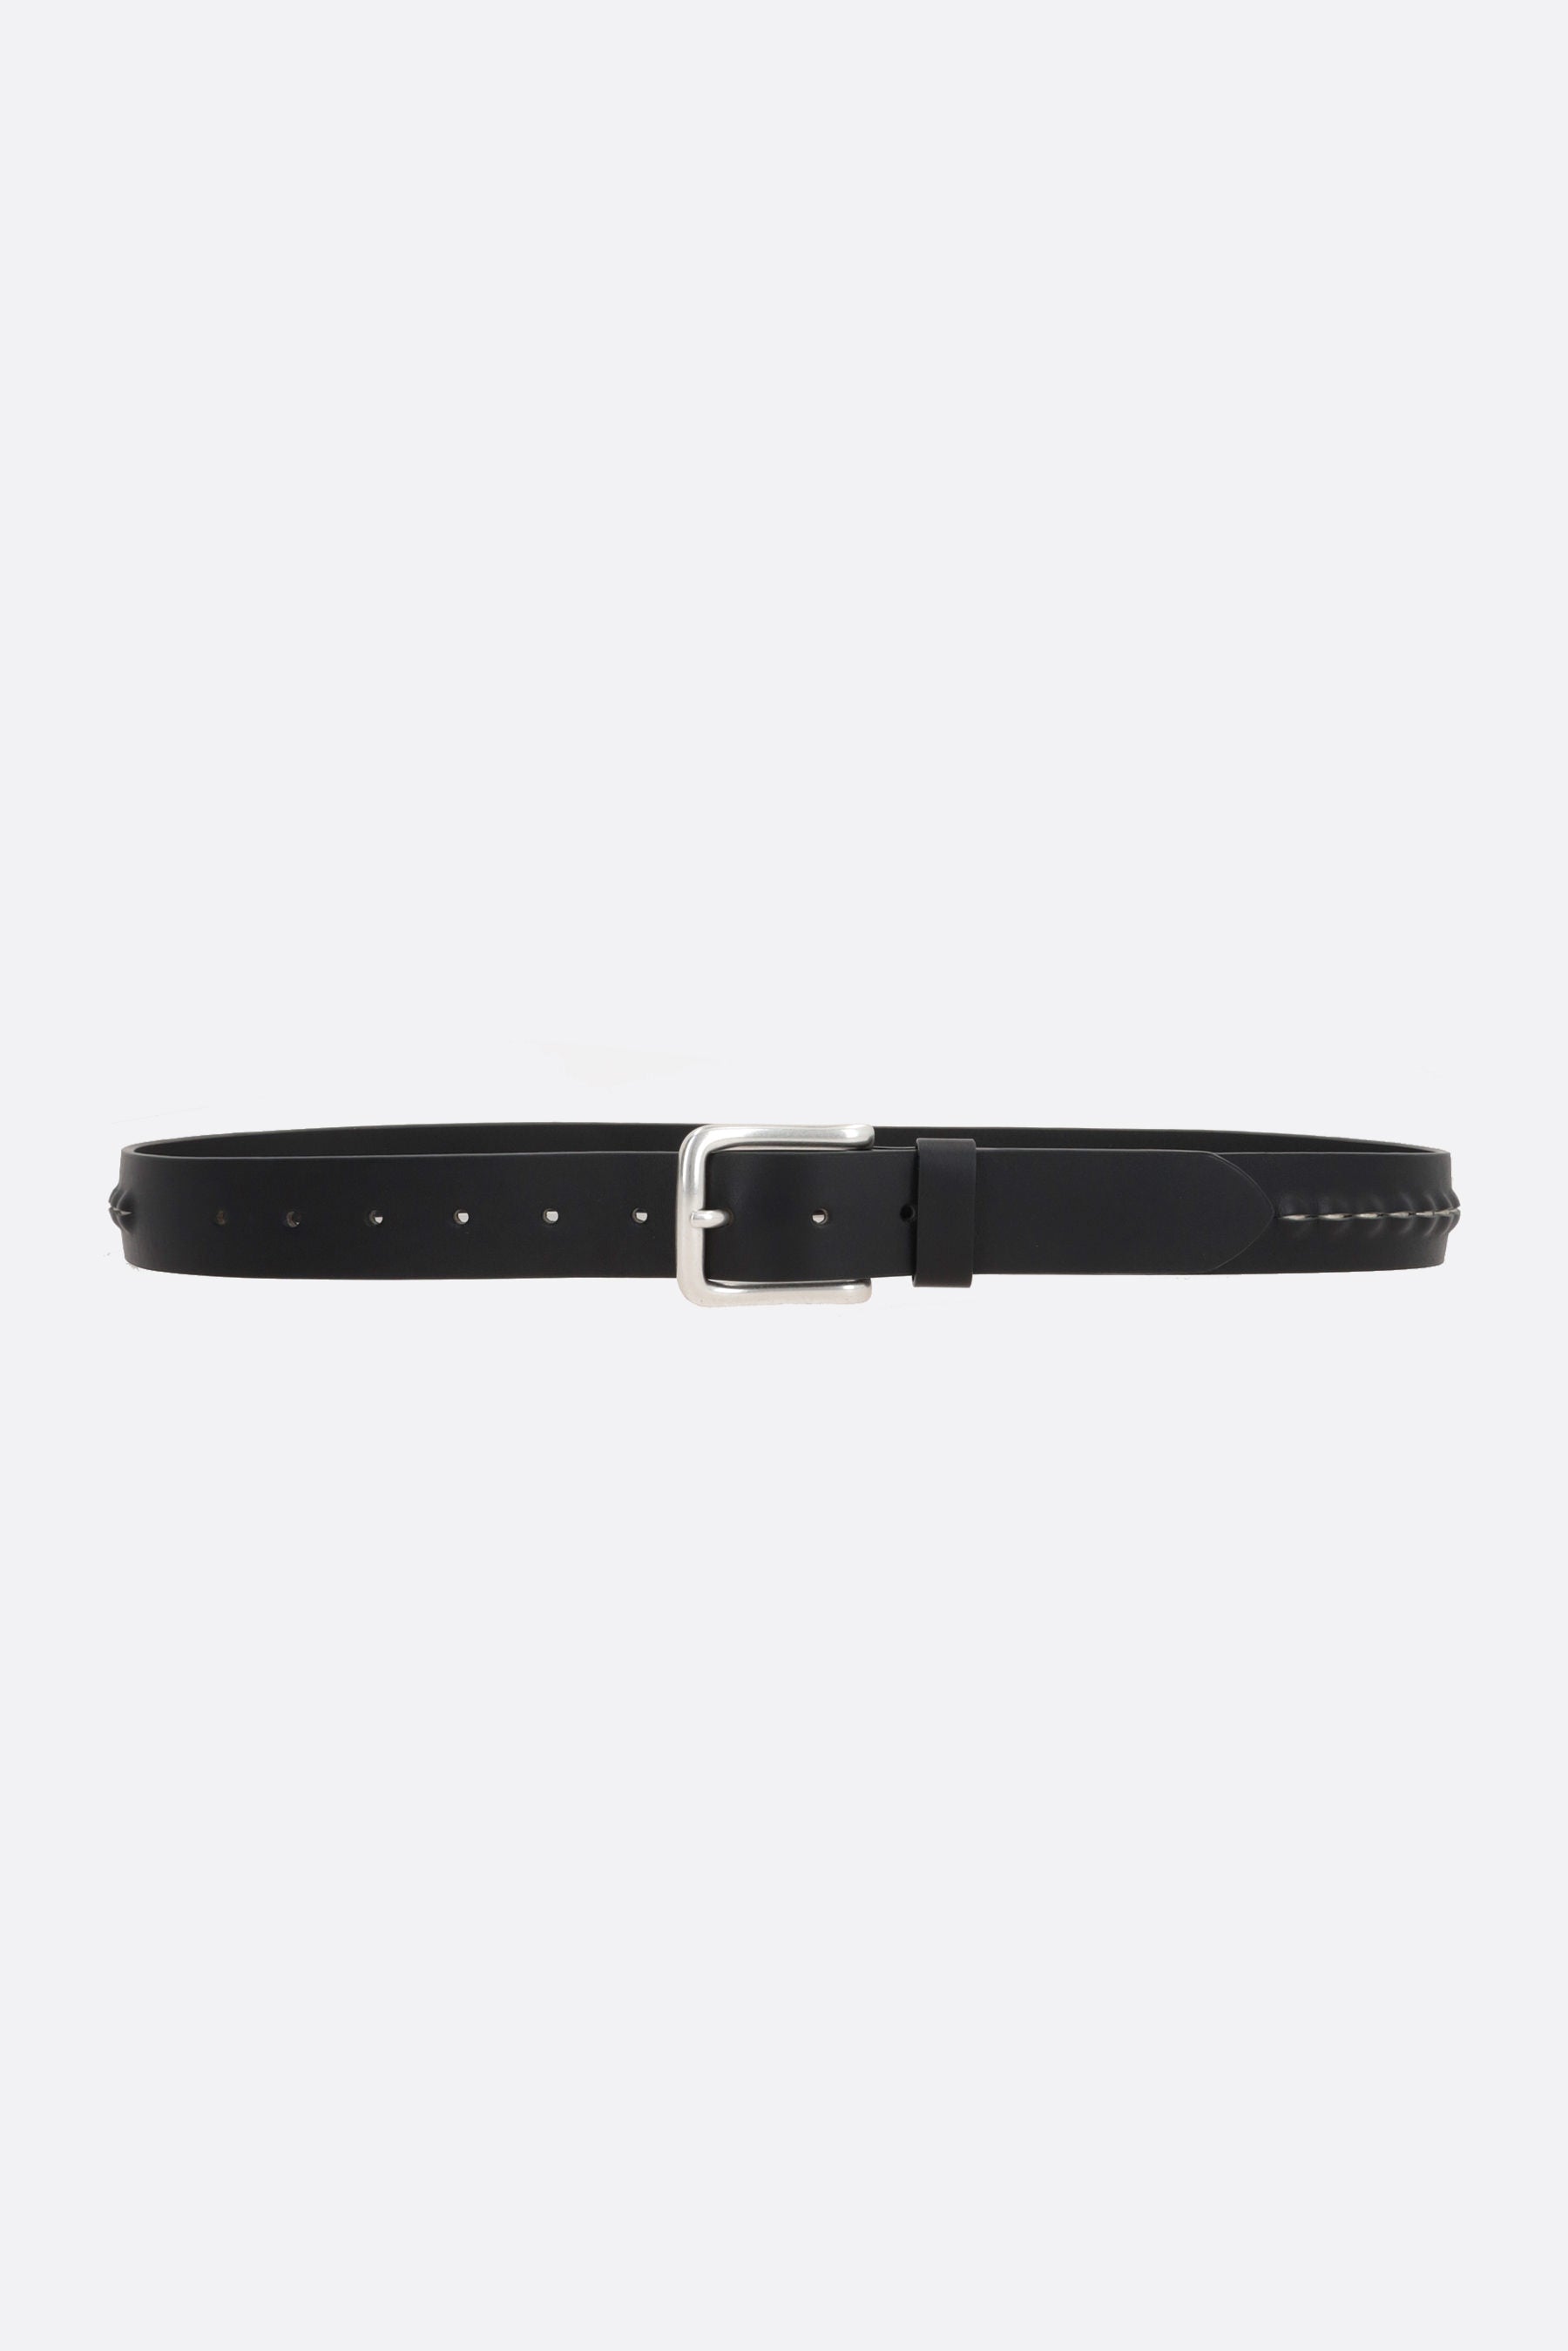 Göta smooth leather belt